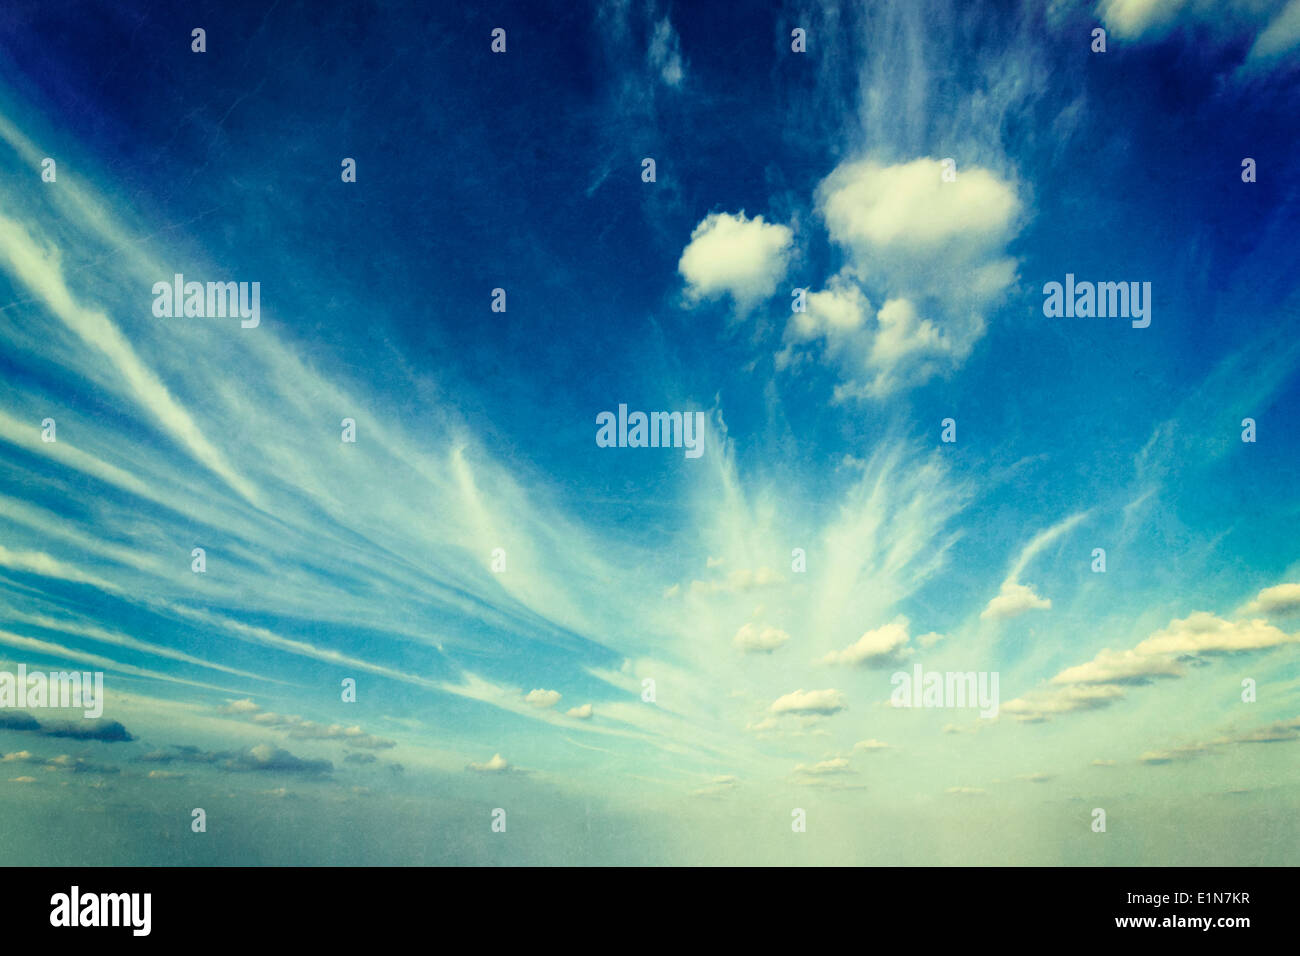 Blue sky with white cirrus clouds retro image cross-processed Stock Photo